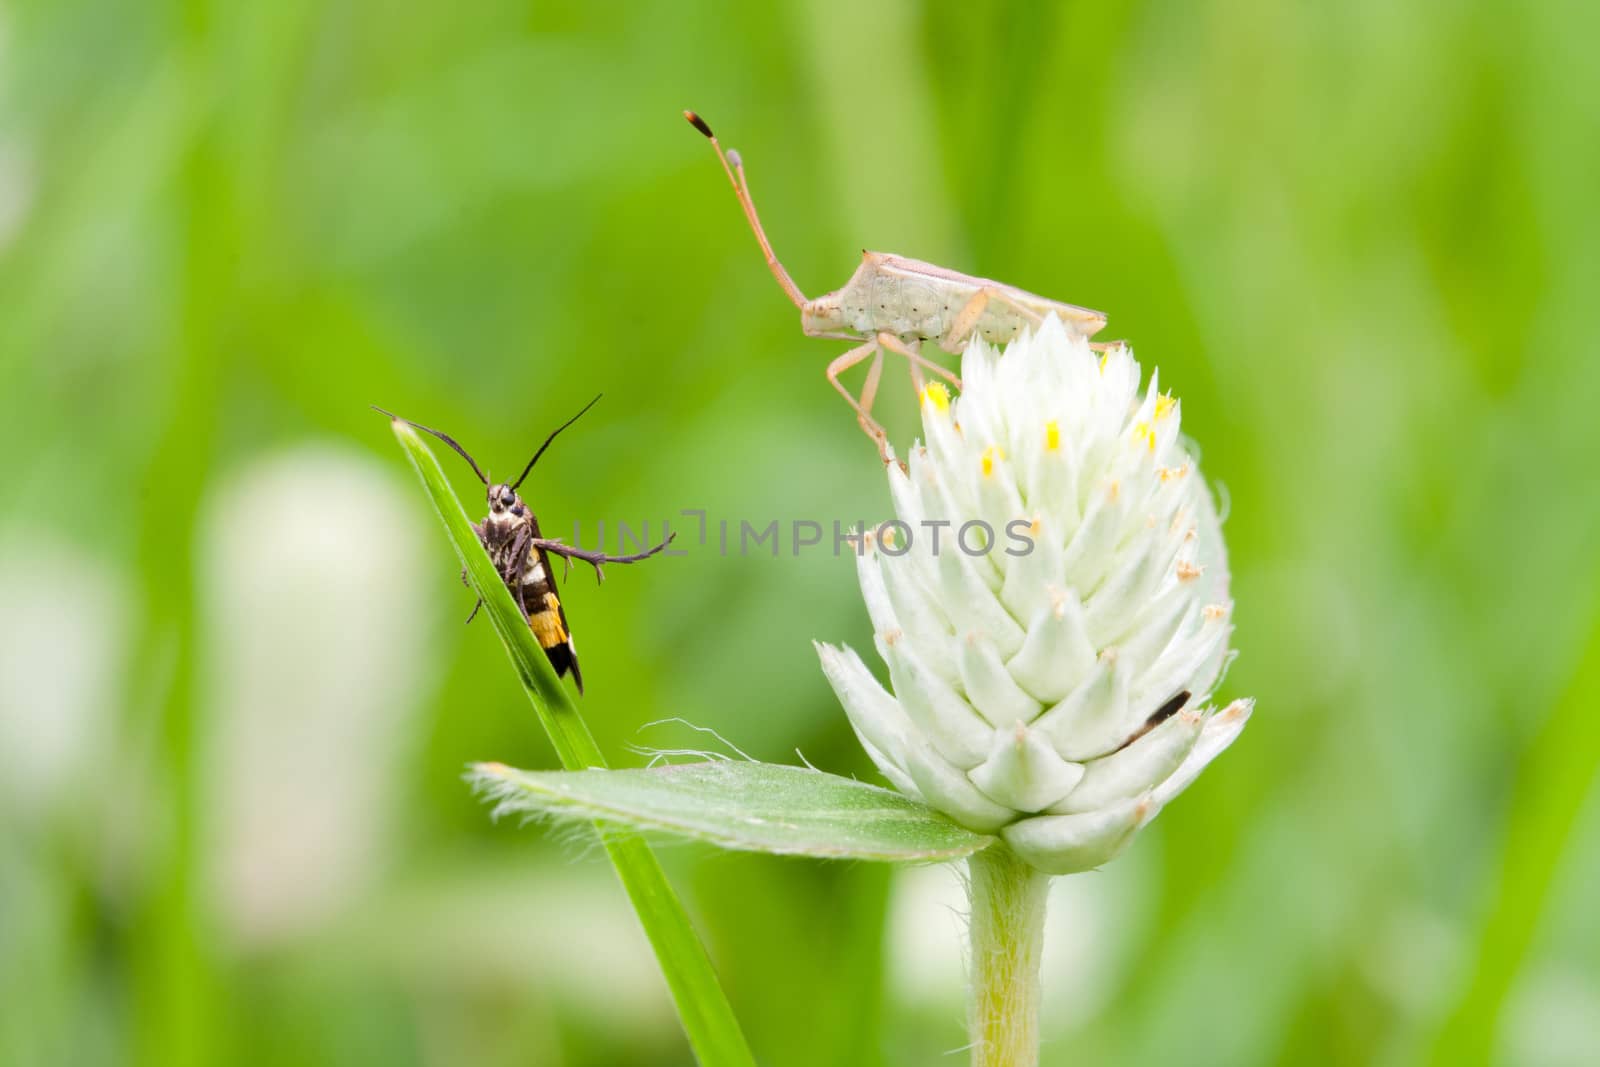 2 bugs on the Amaranth flower by myrainjom01